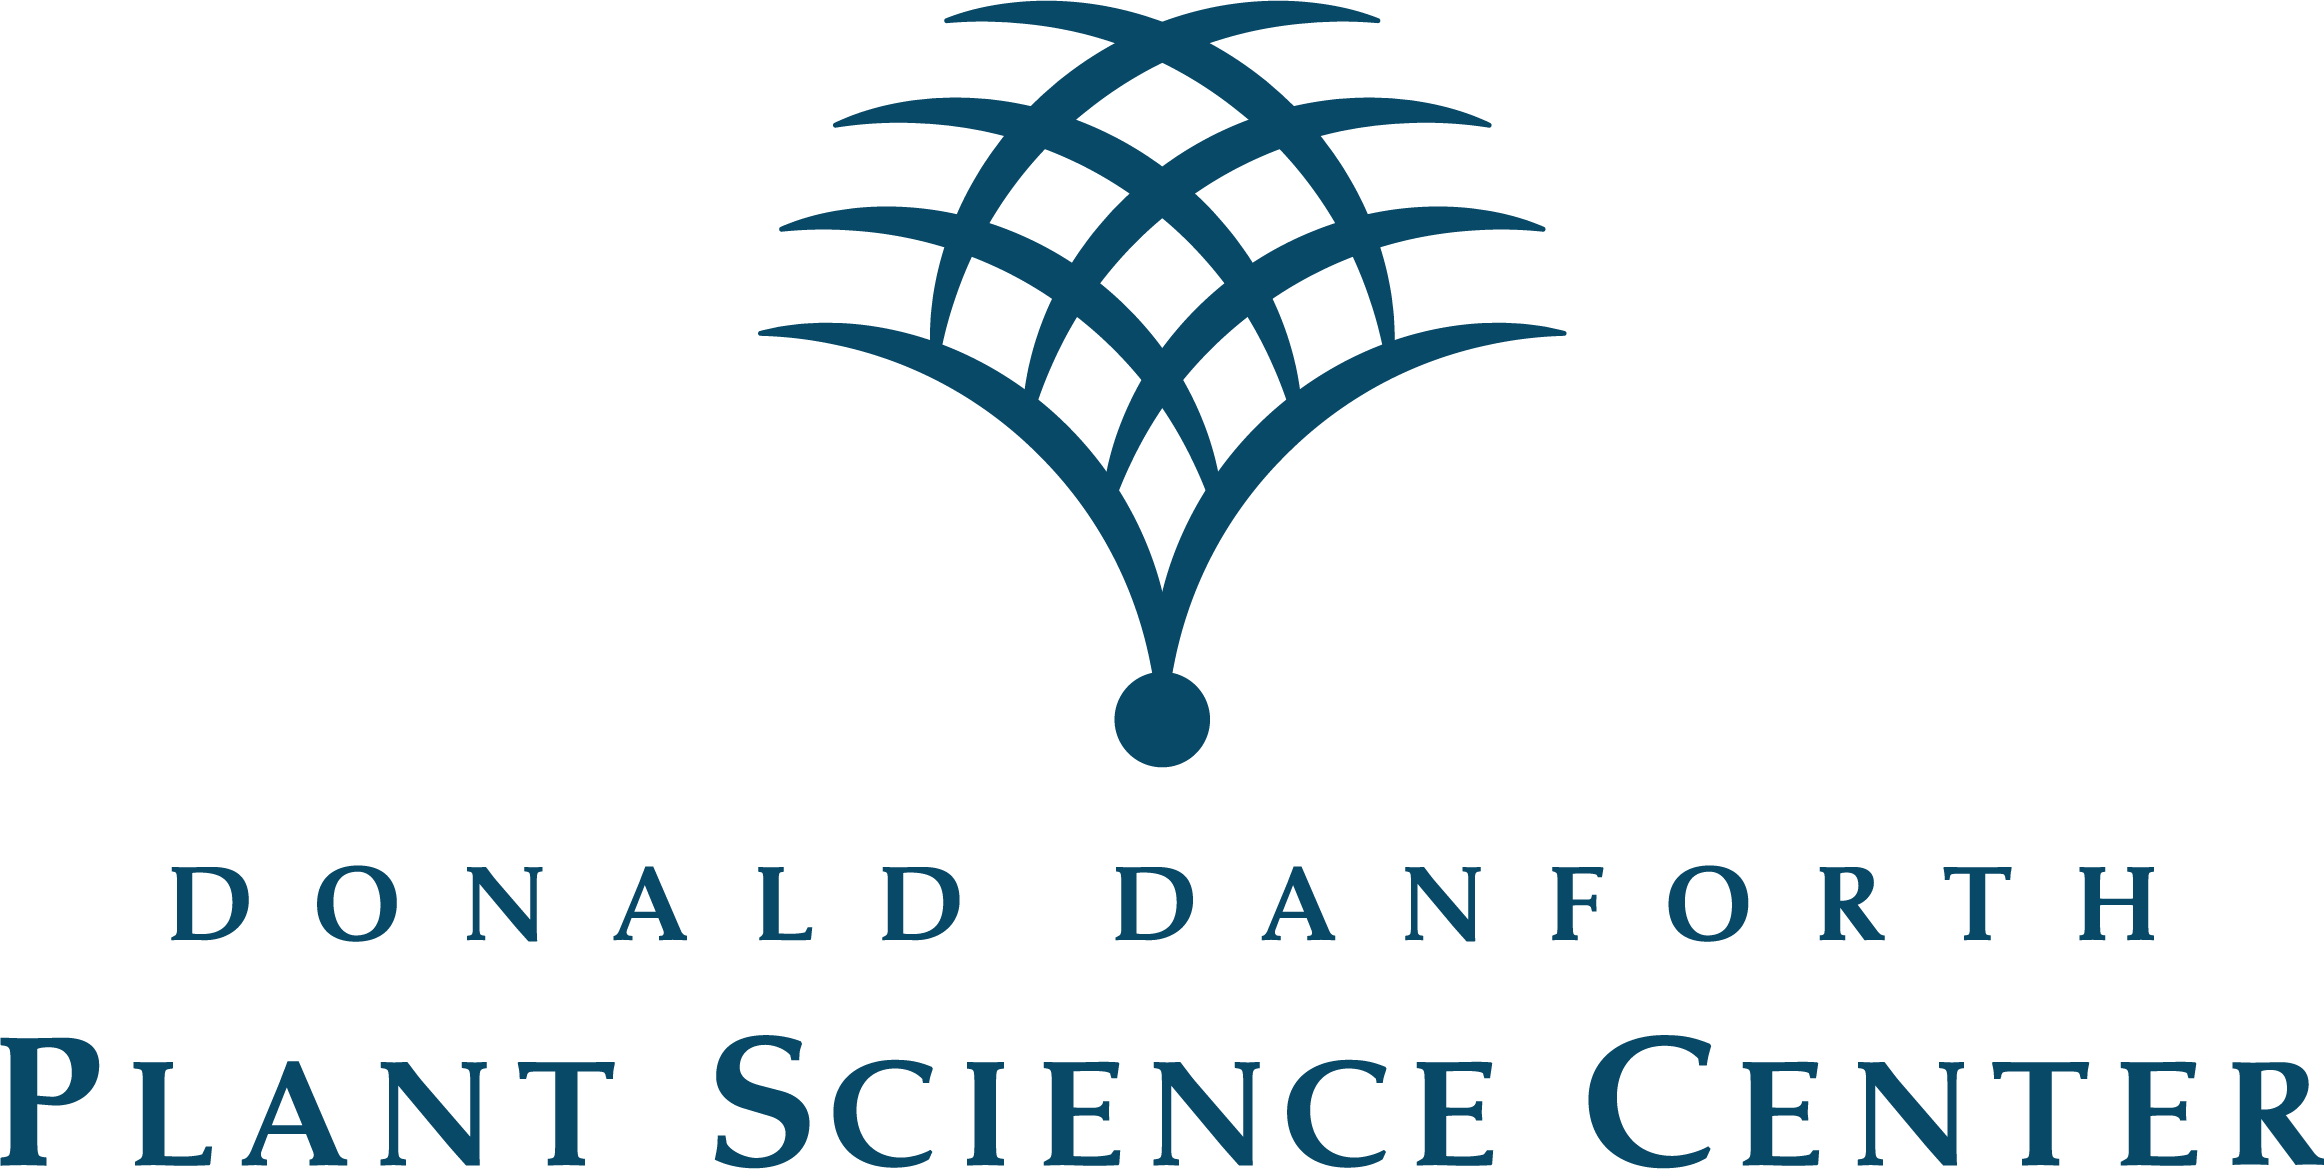 Donald danforth plant science center jobs